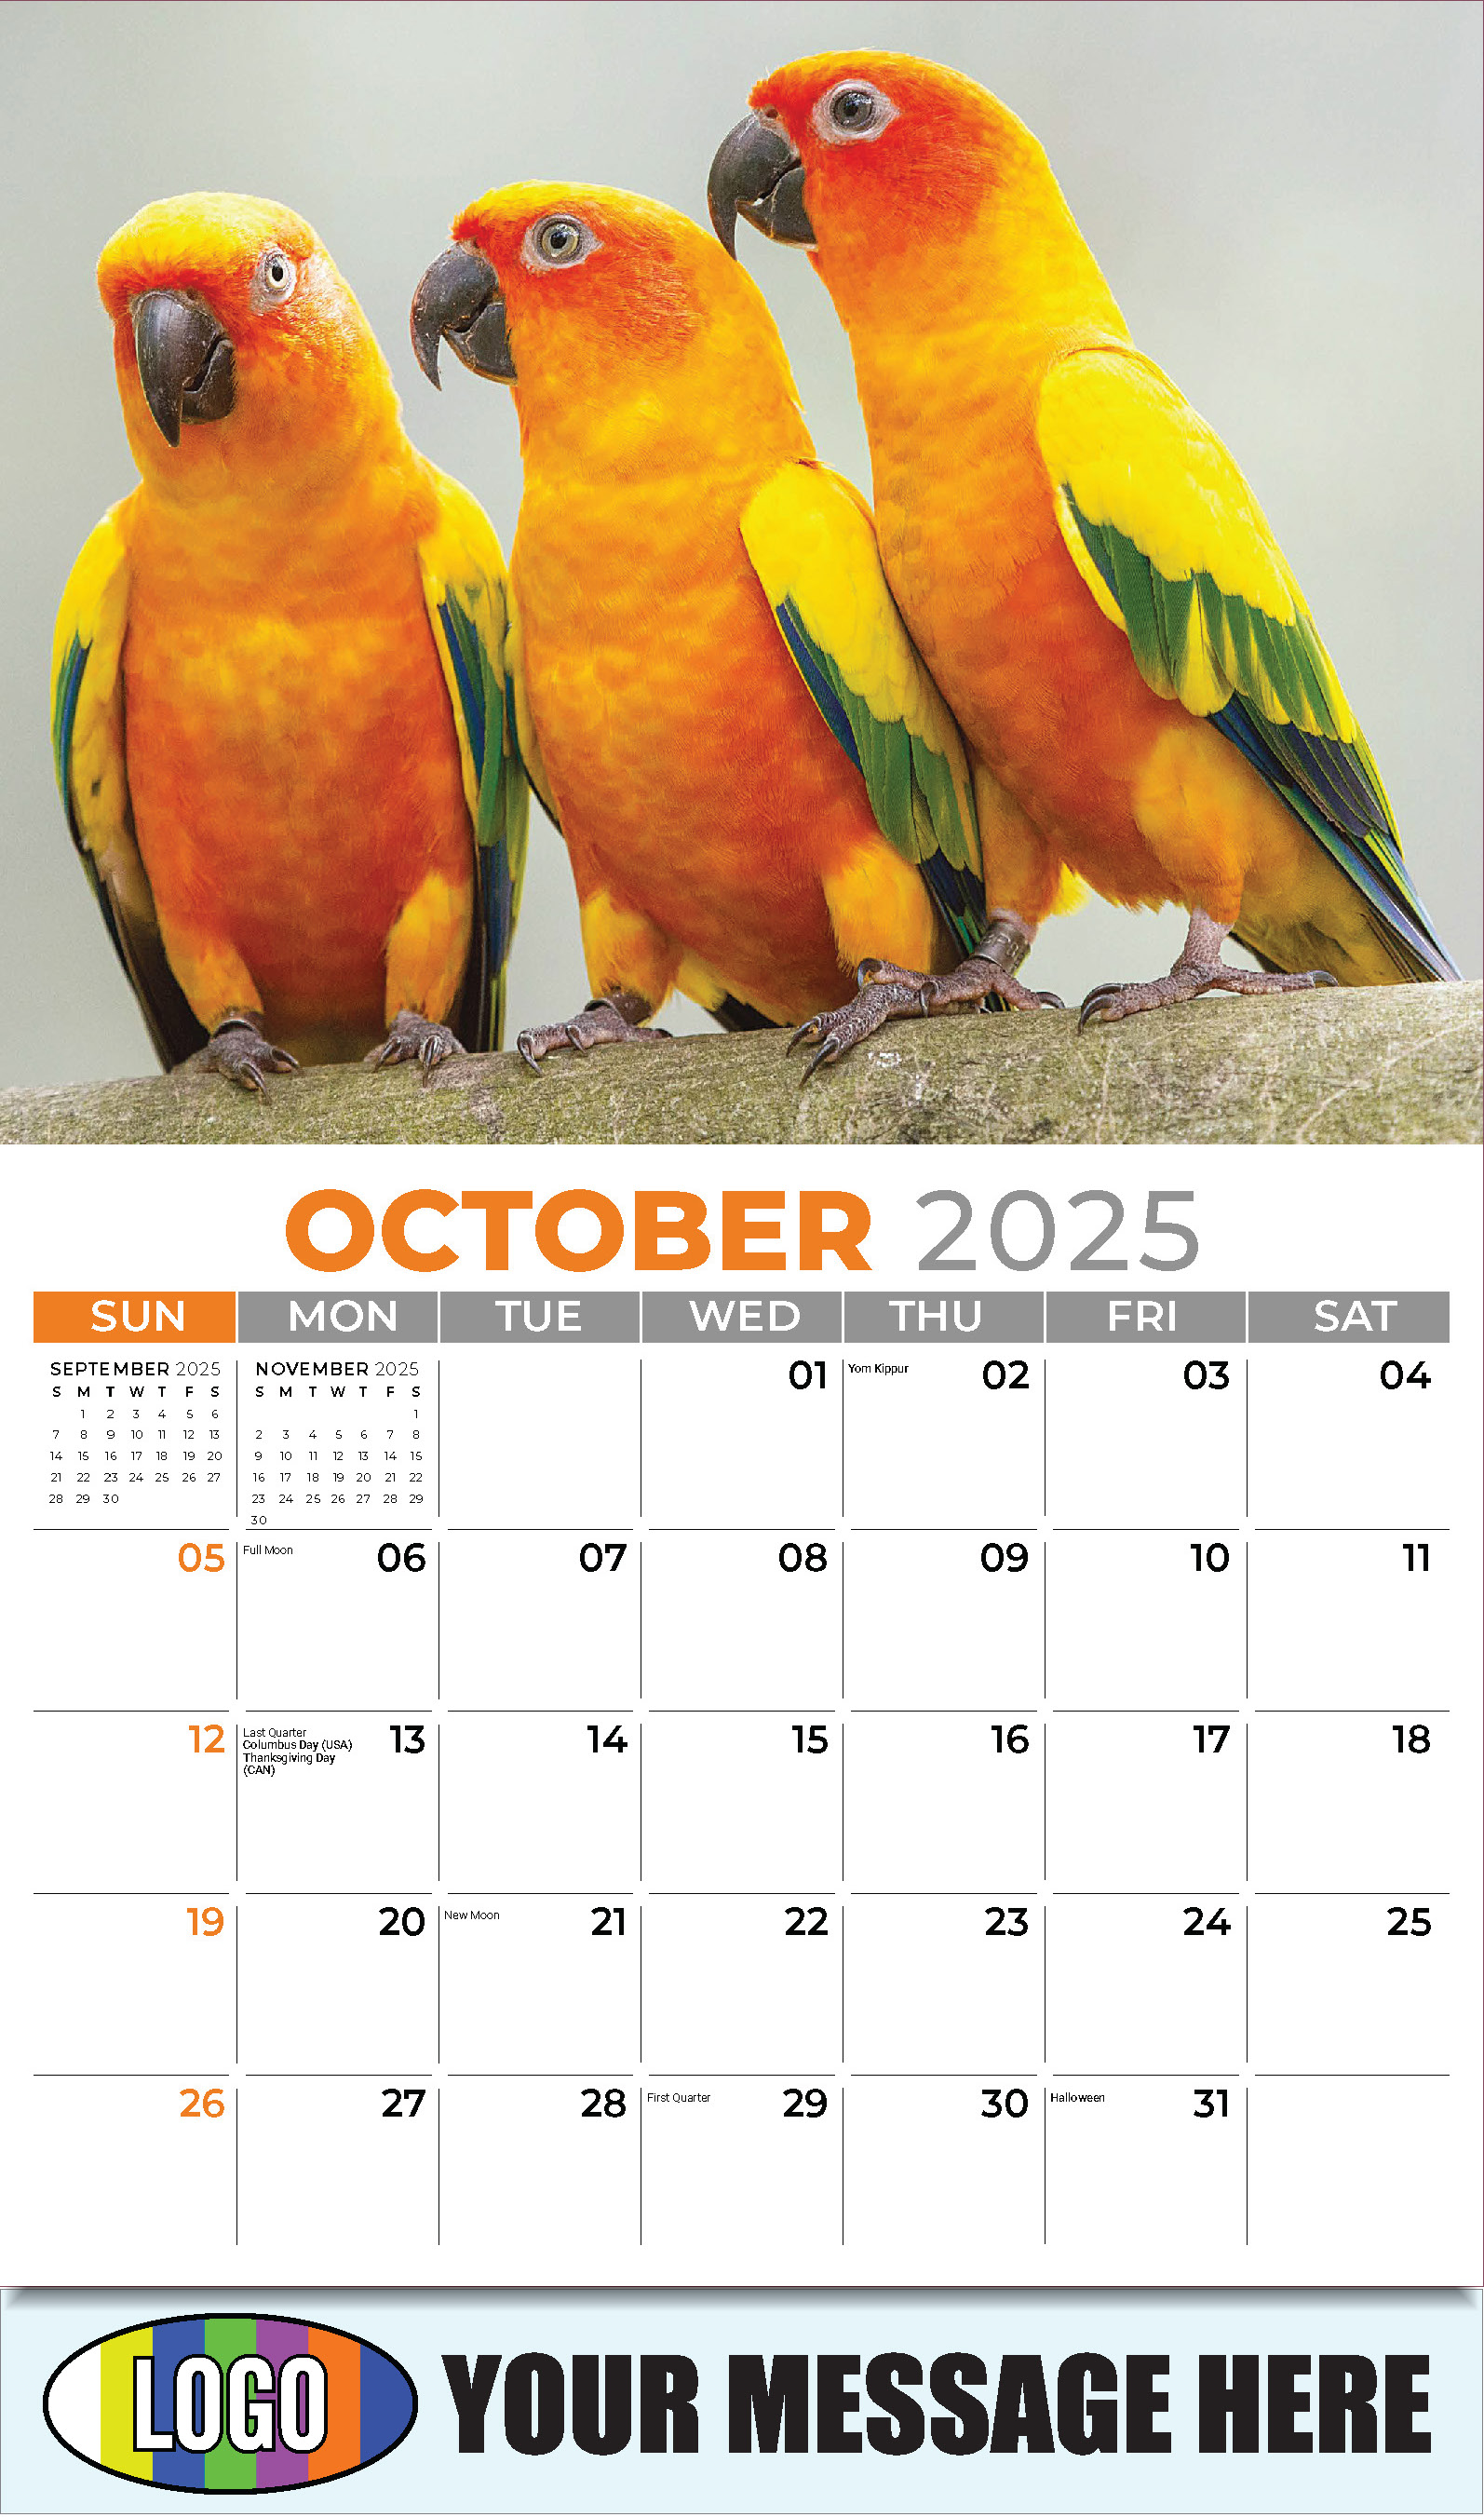 Pets 2025 Business Advertising Wall Calendar - October